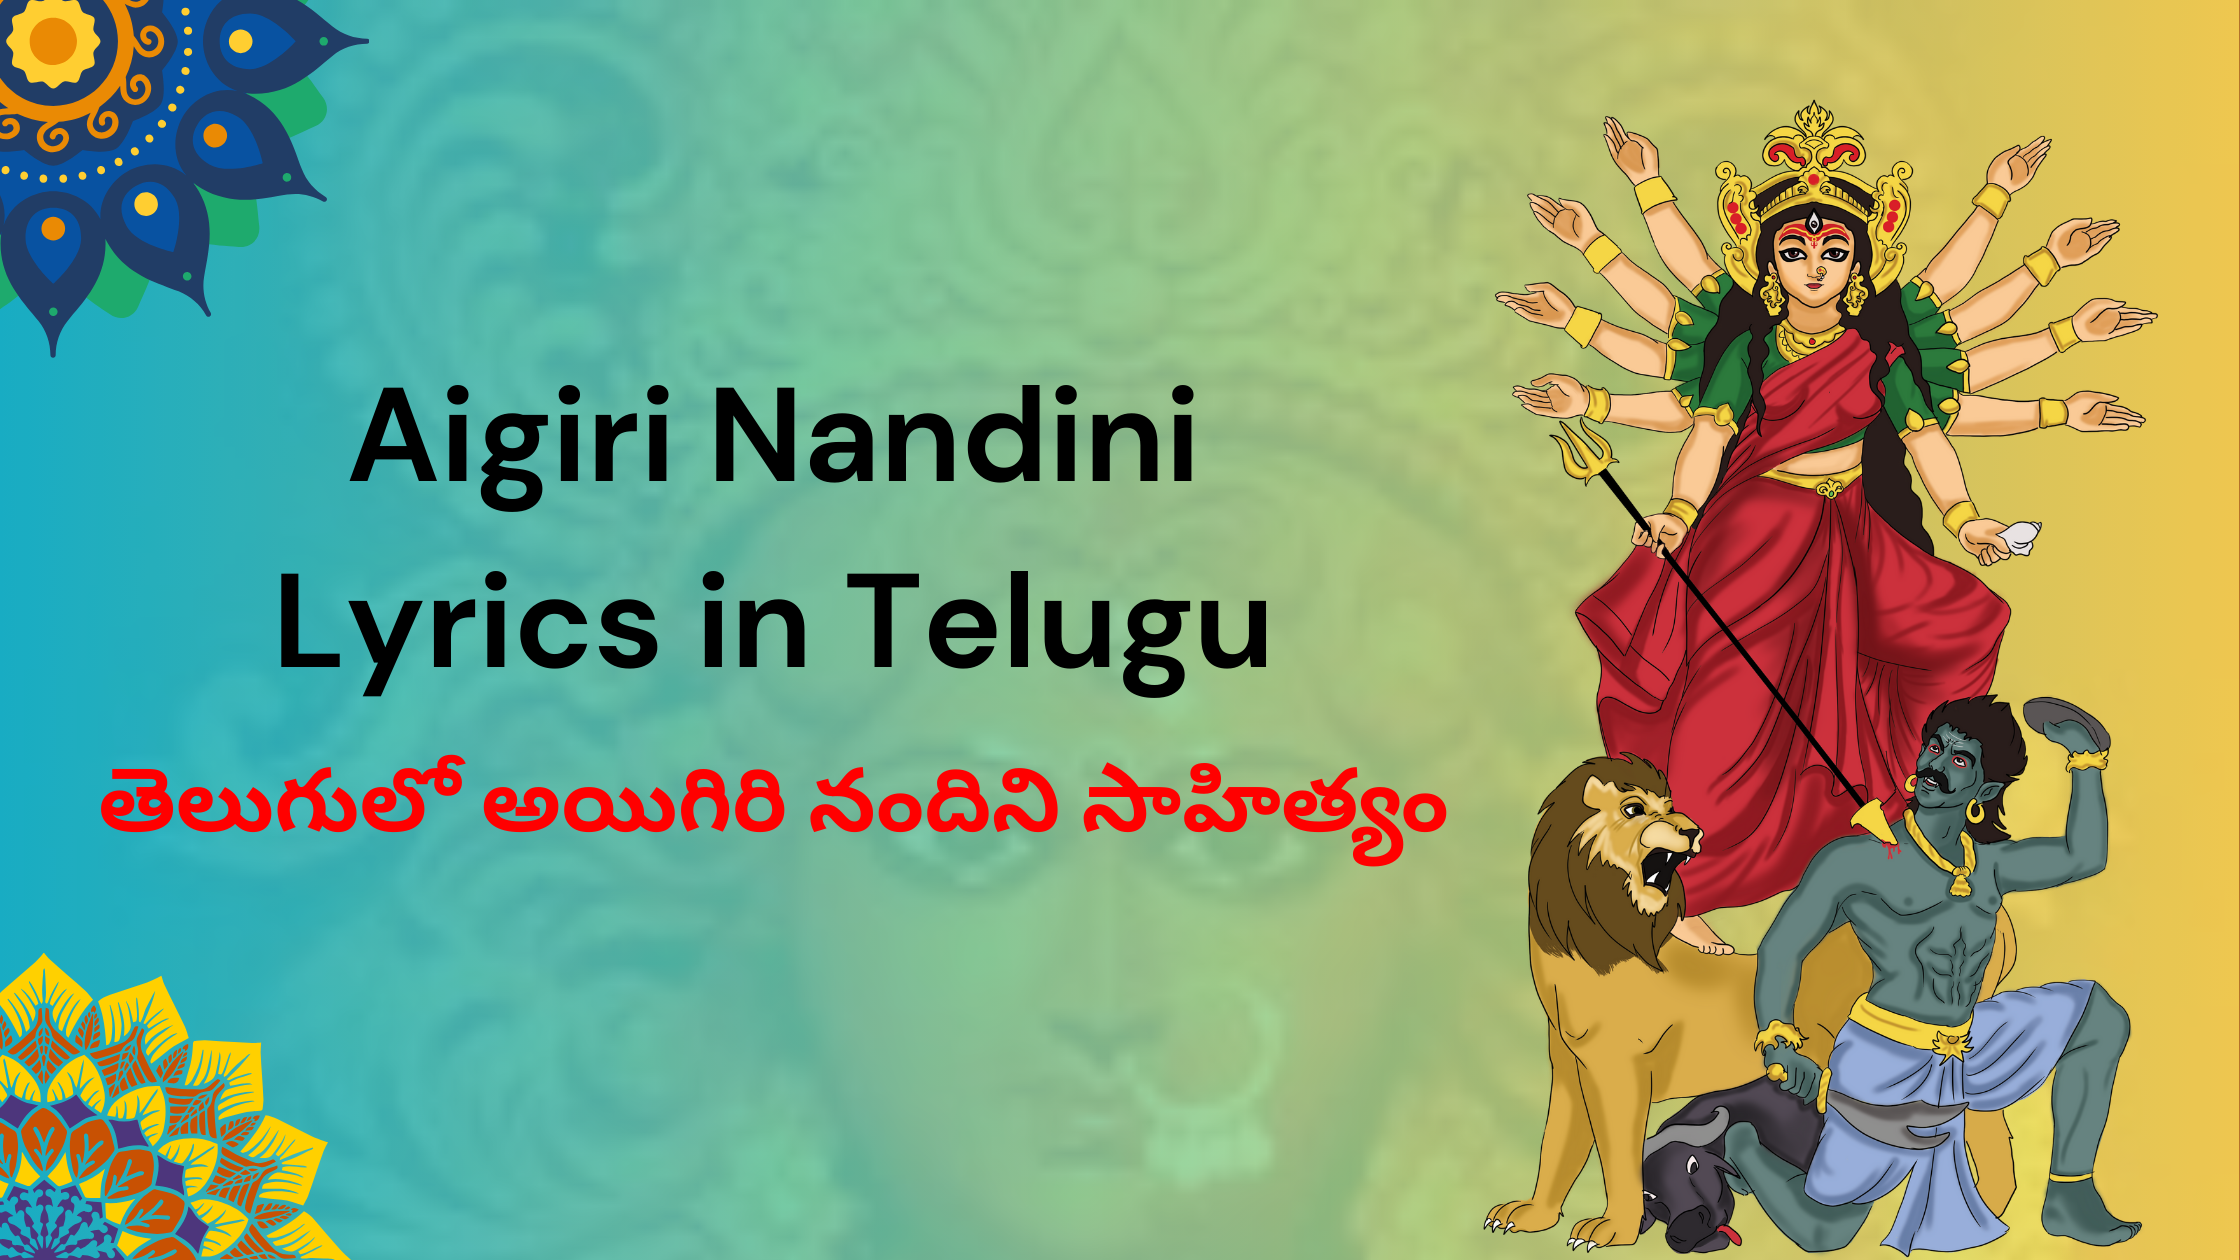 Aigiri Nandini Lyrics in Telugu